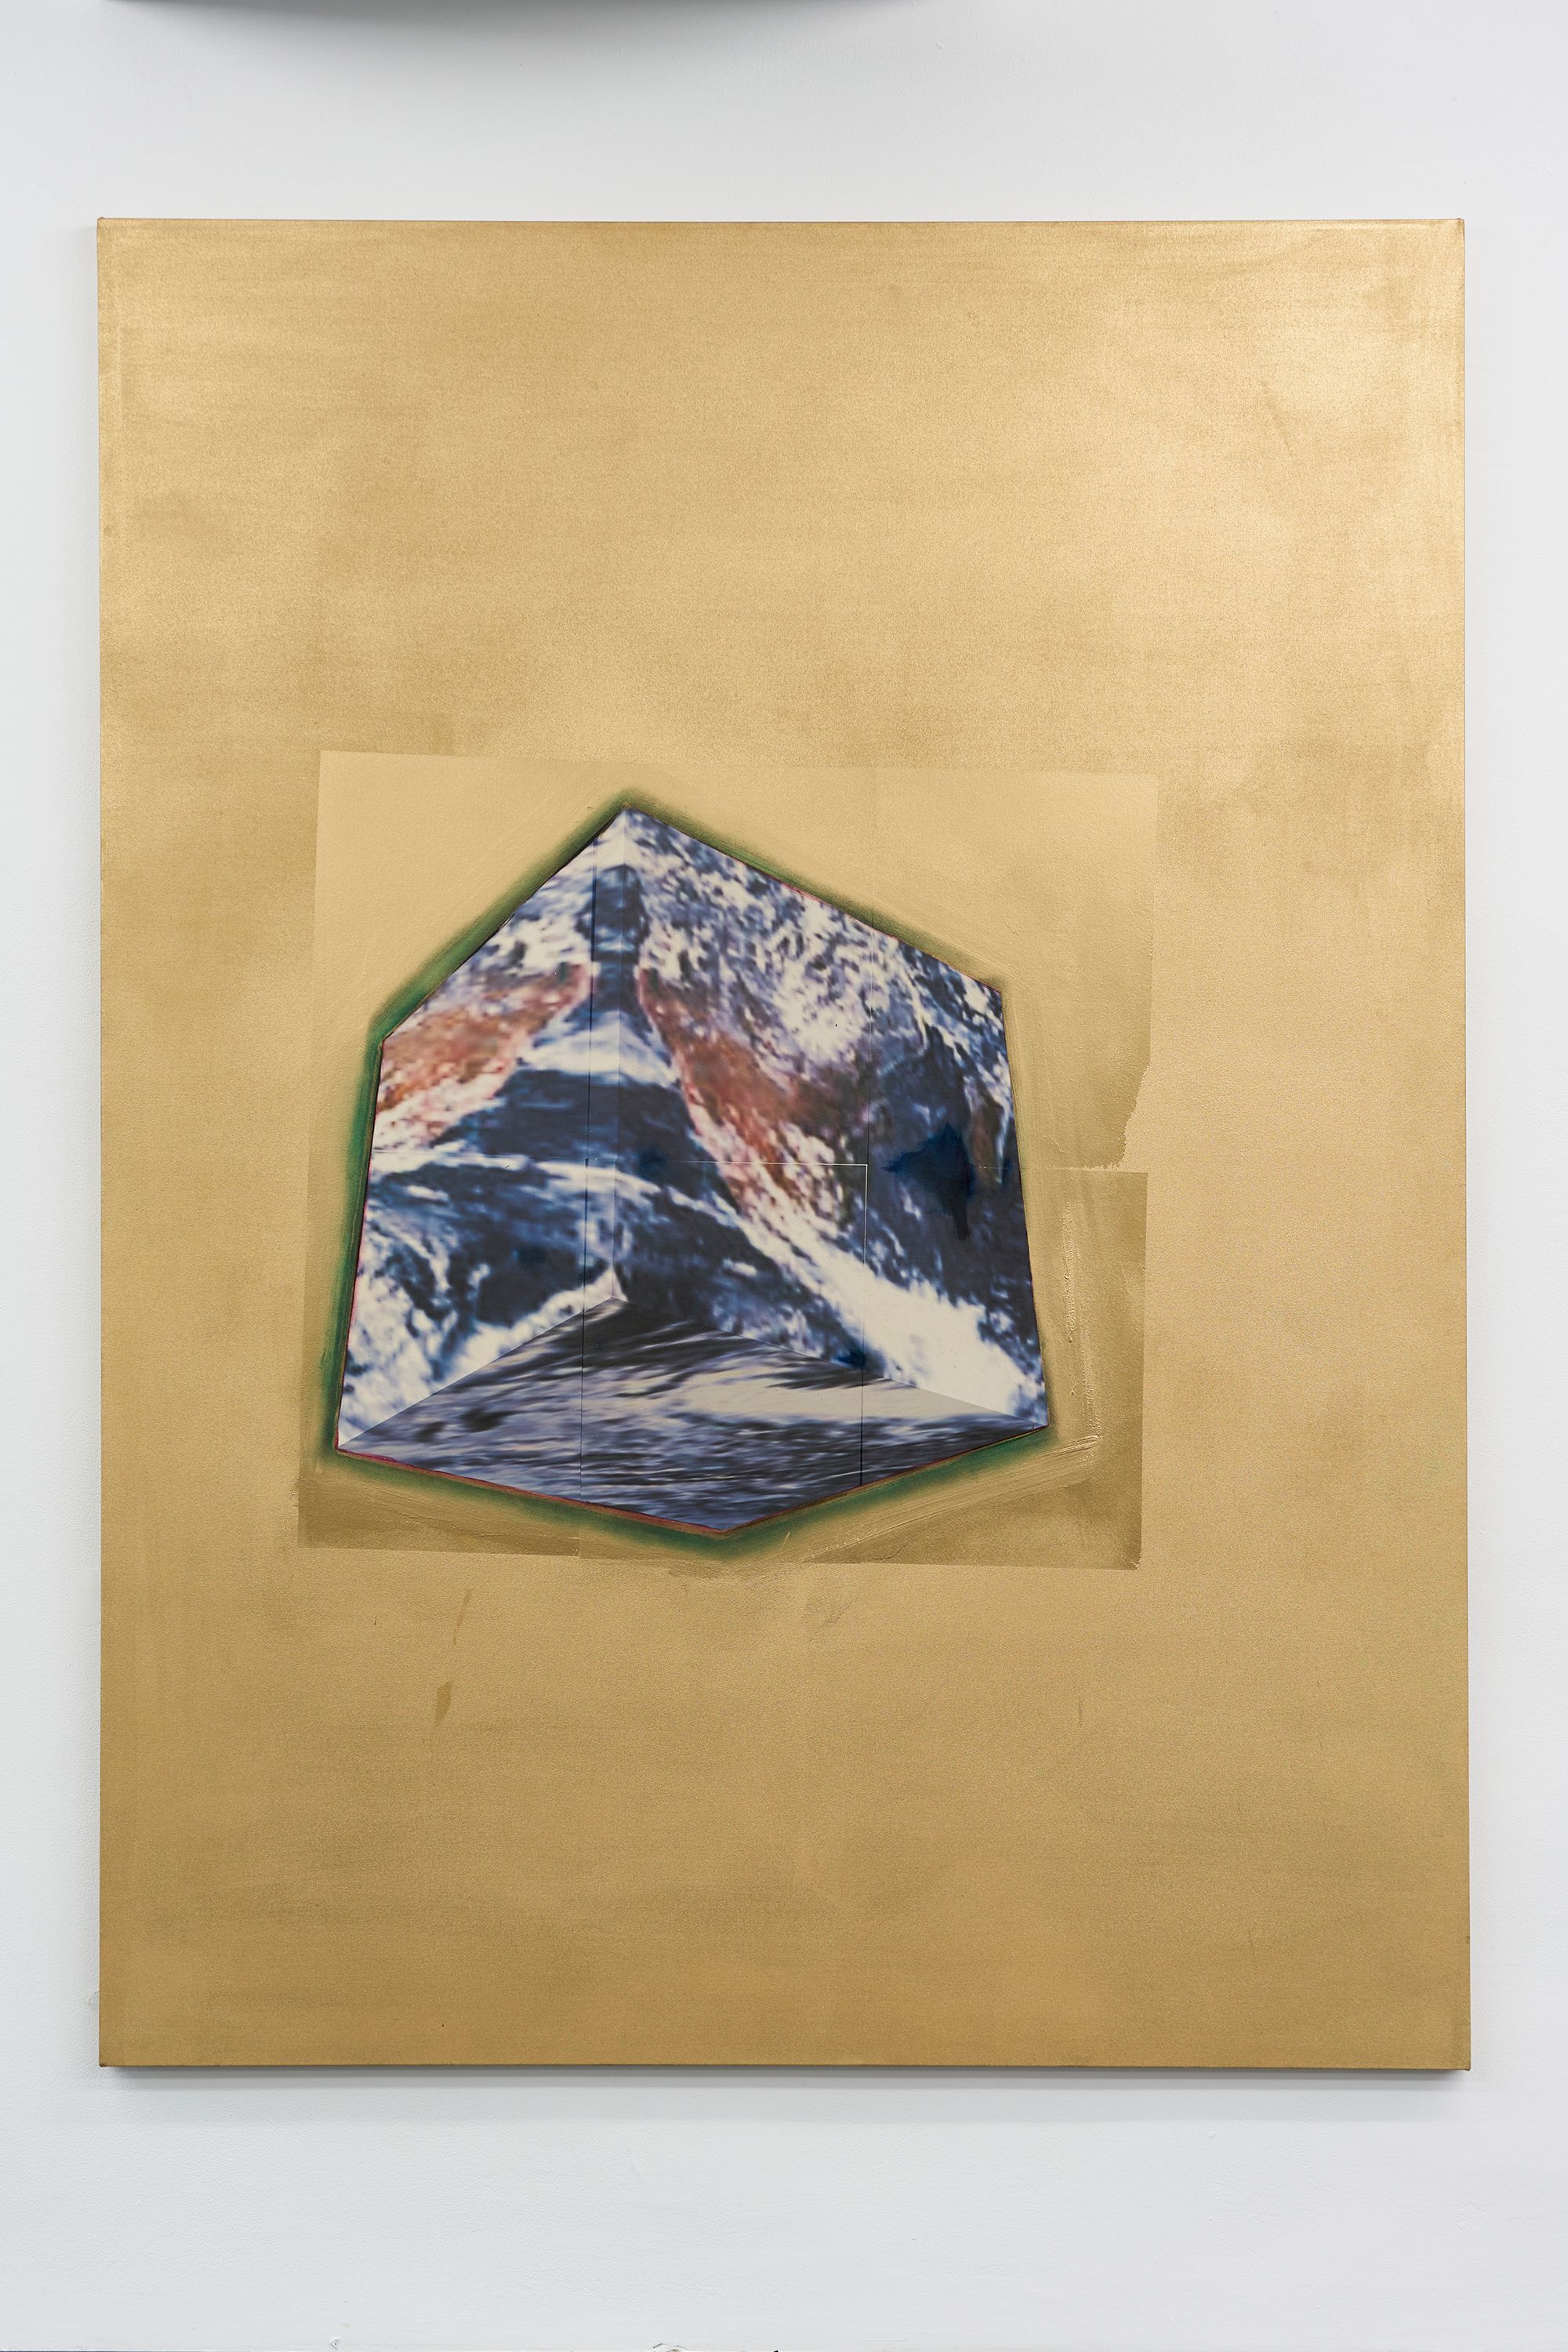 Tobias Spichtig, Planet Erde, 2018, Vinyl, print, oil and laquer on canvas, 195 ⁠× ⁠145 ⁠⁠cm